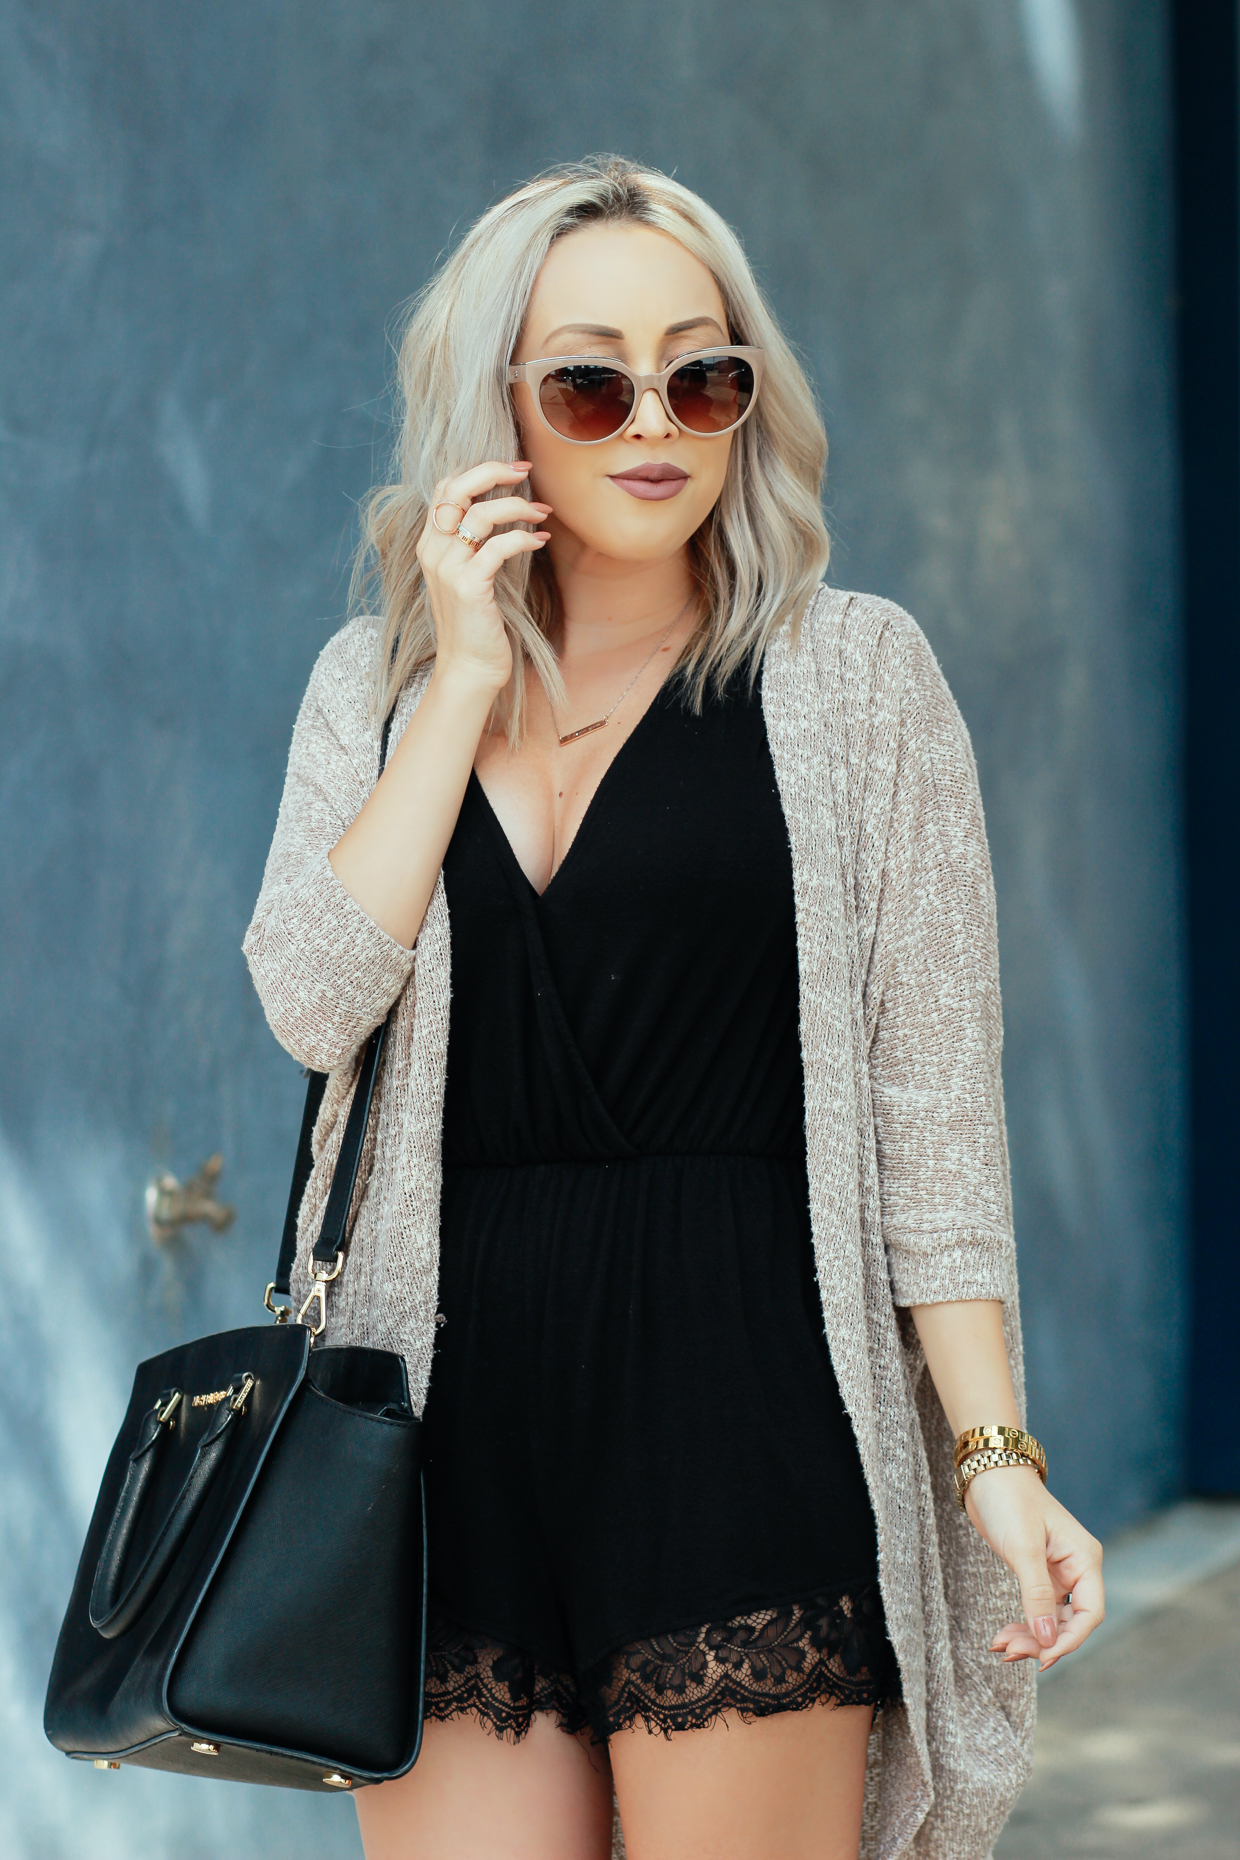 Blondie in the City | Balenciaga Sunglasses, Black Lace Romper, Black Michael Kors Bag